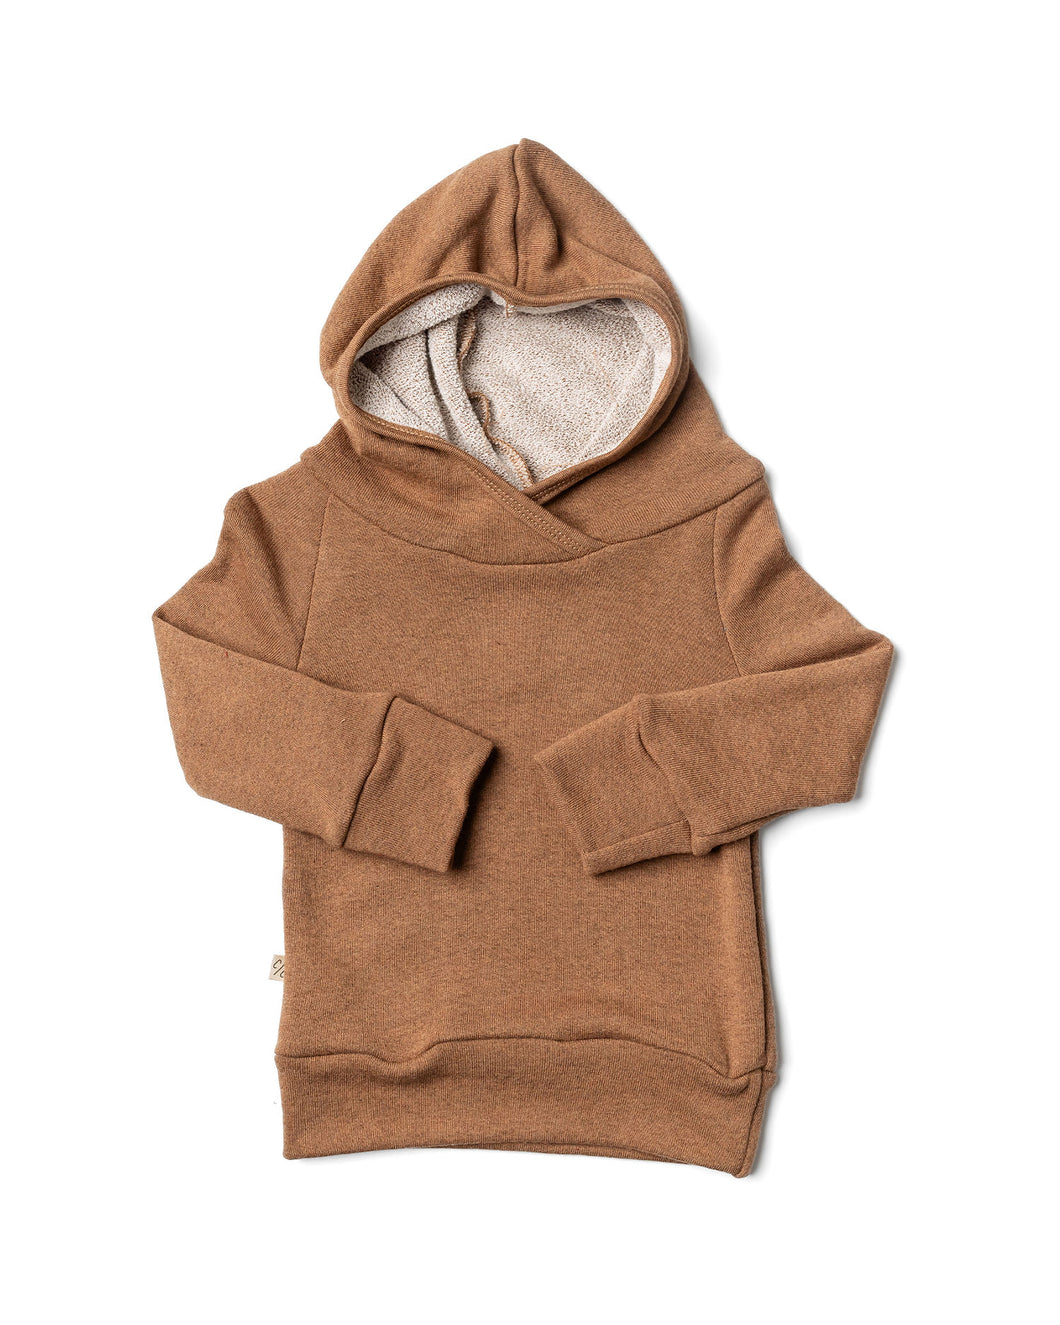 trademark raglan hoodie - teddy bear